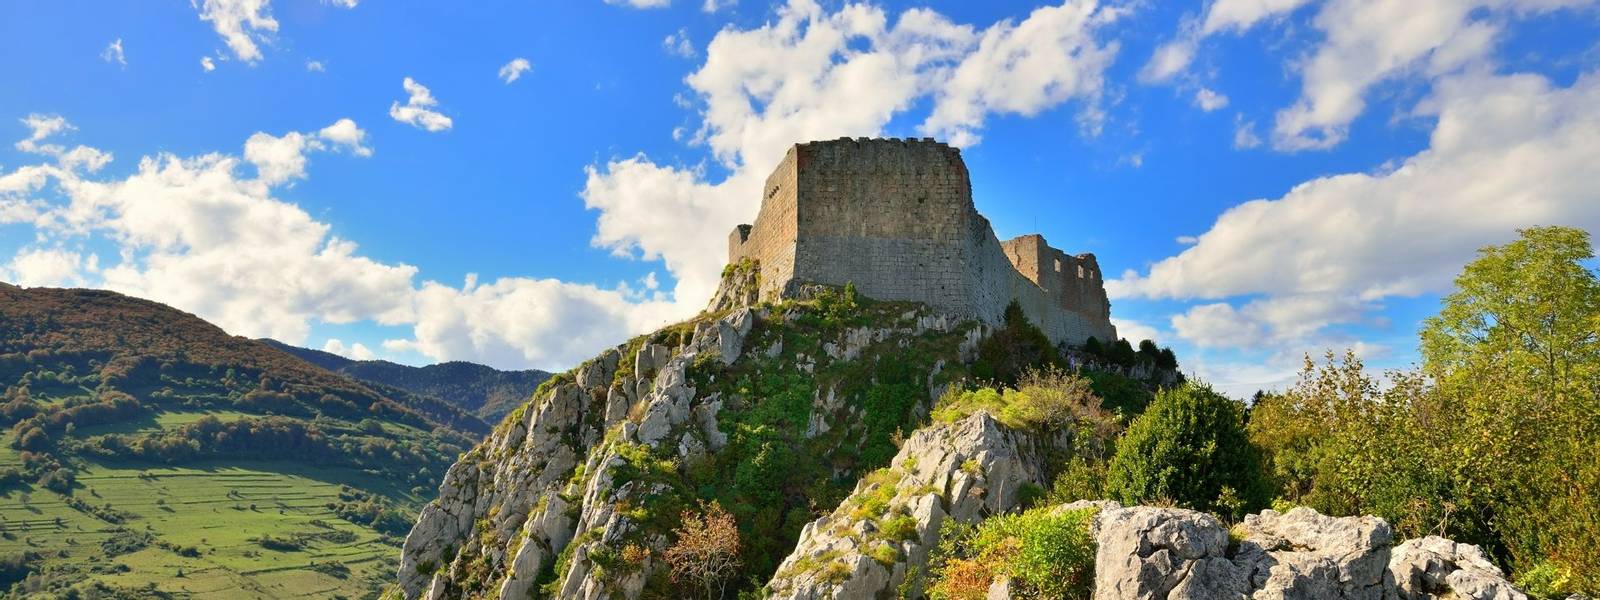 Montsegur cathar castle in France